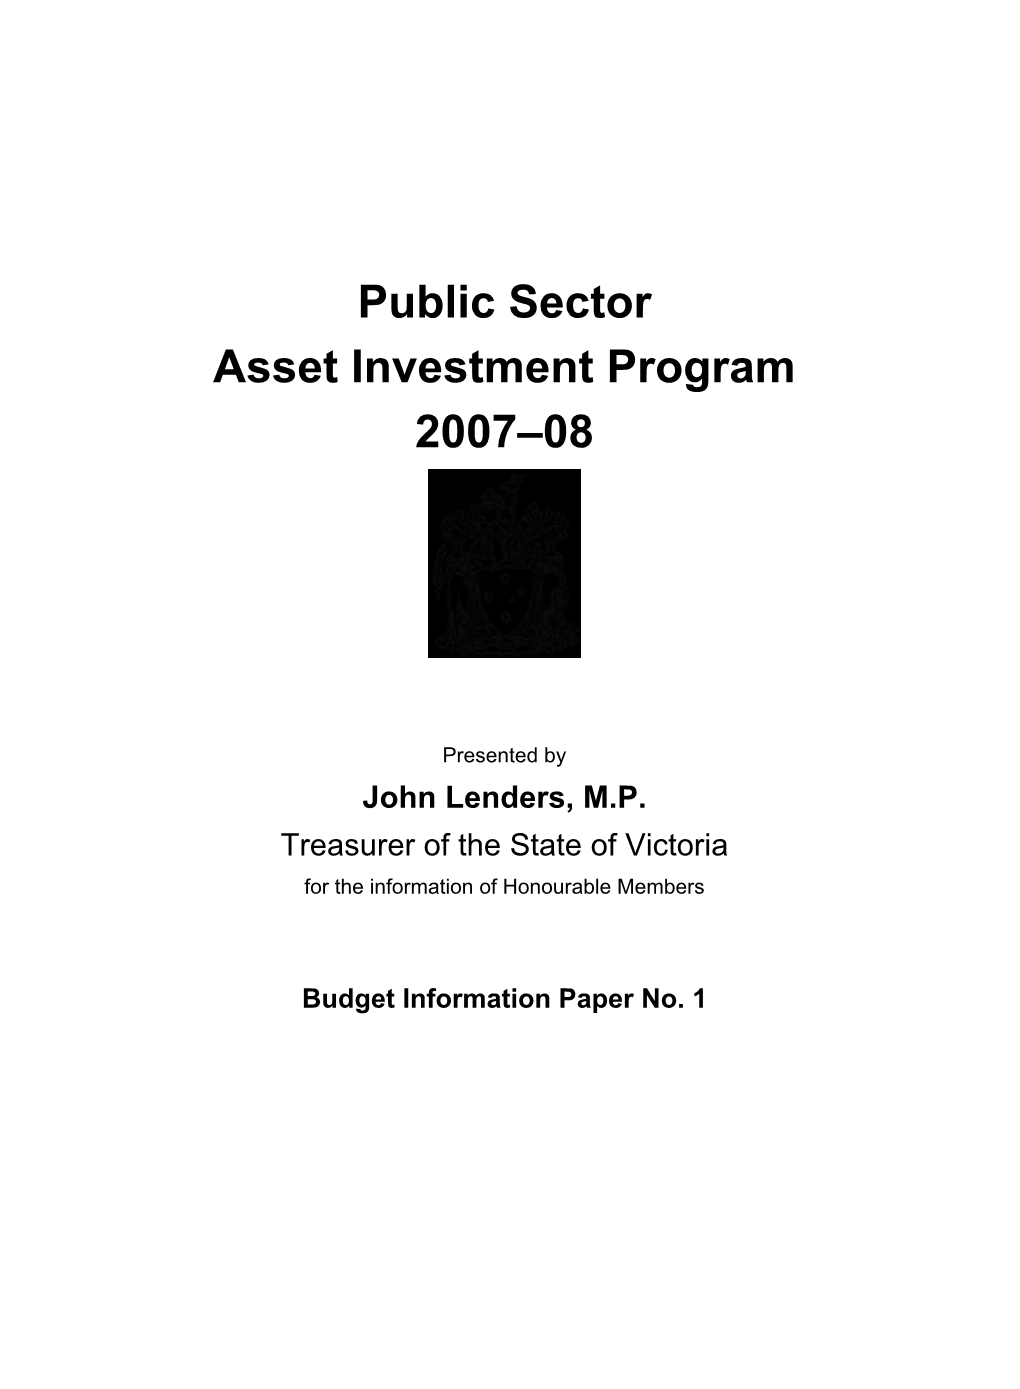 Public Sector Asset Investment Program 2007–08